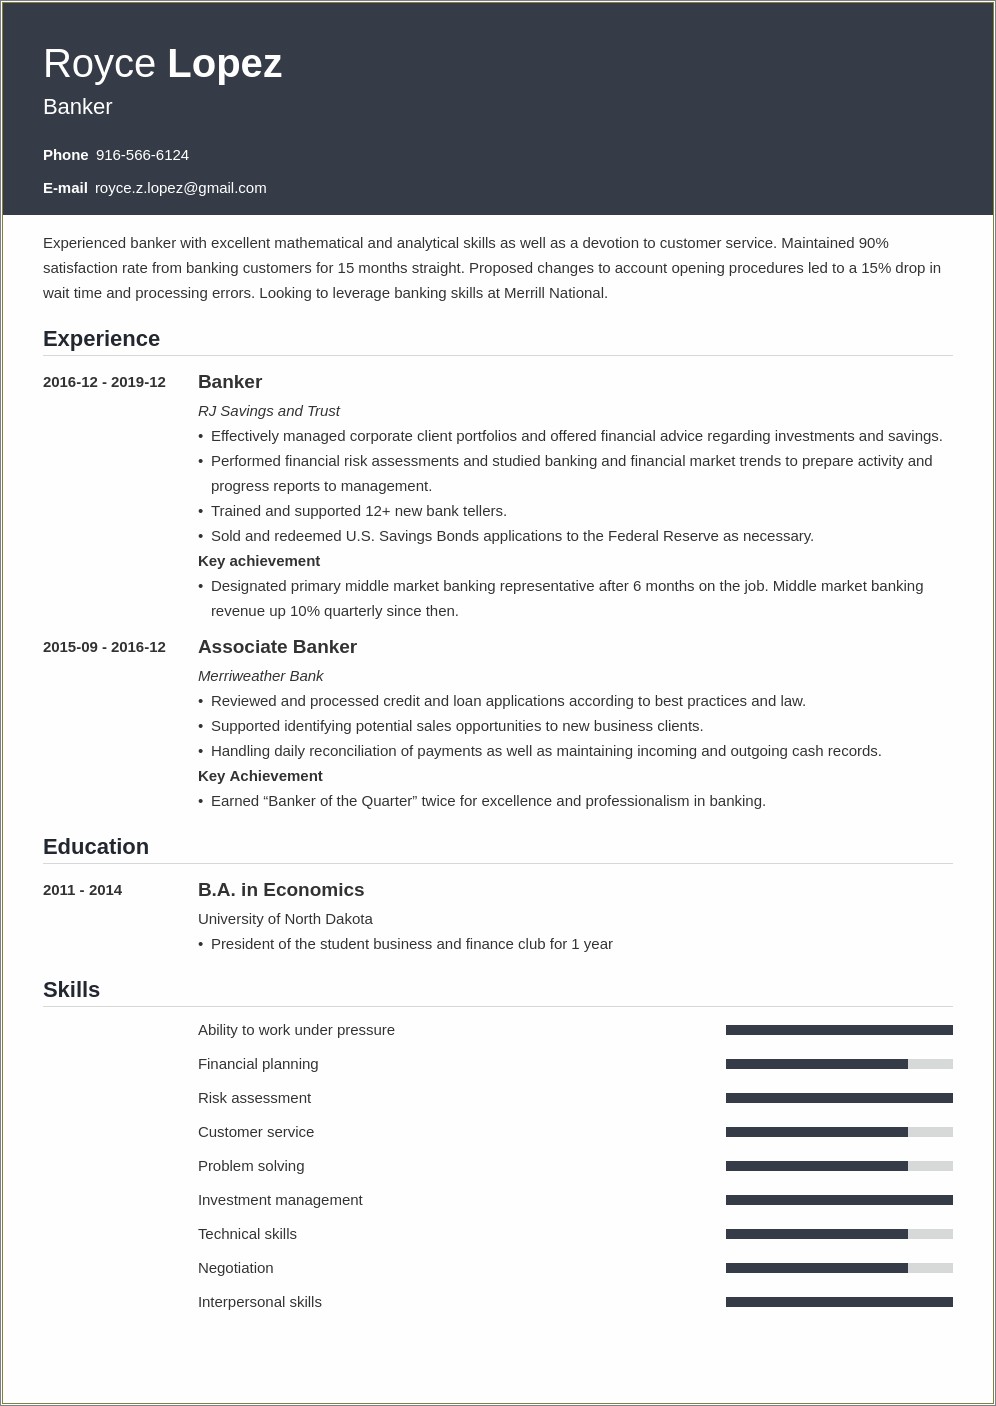 Resume Sample For Job In Bank